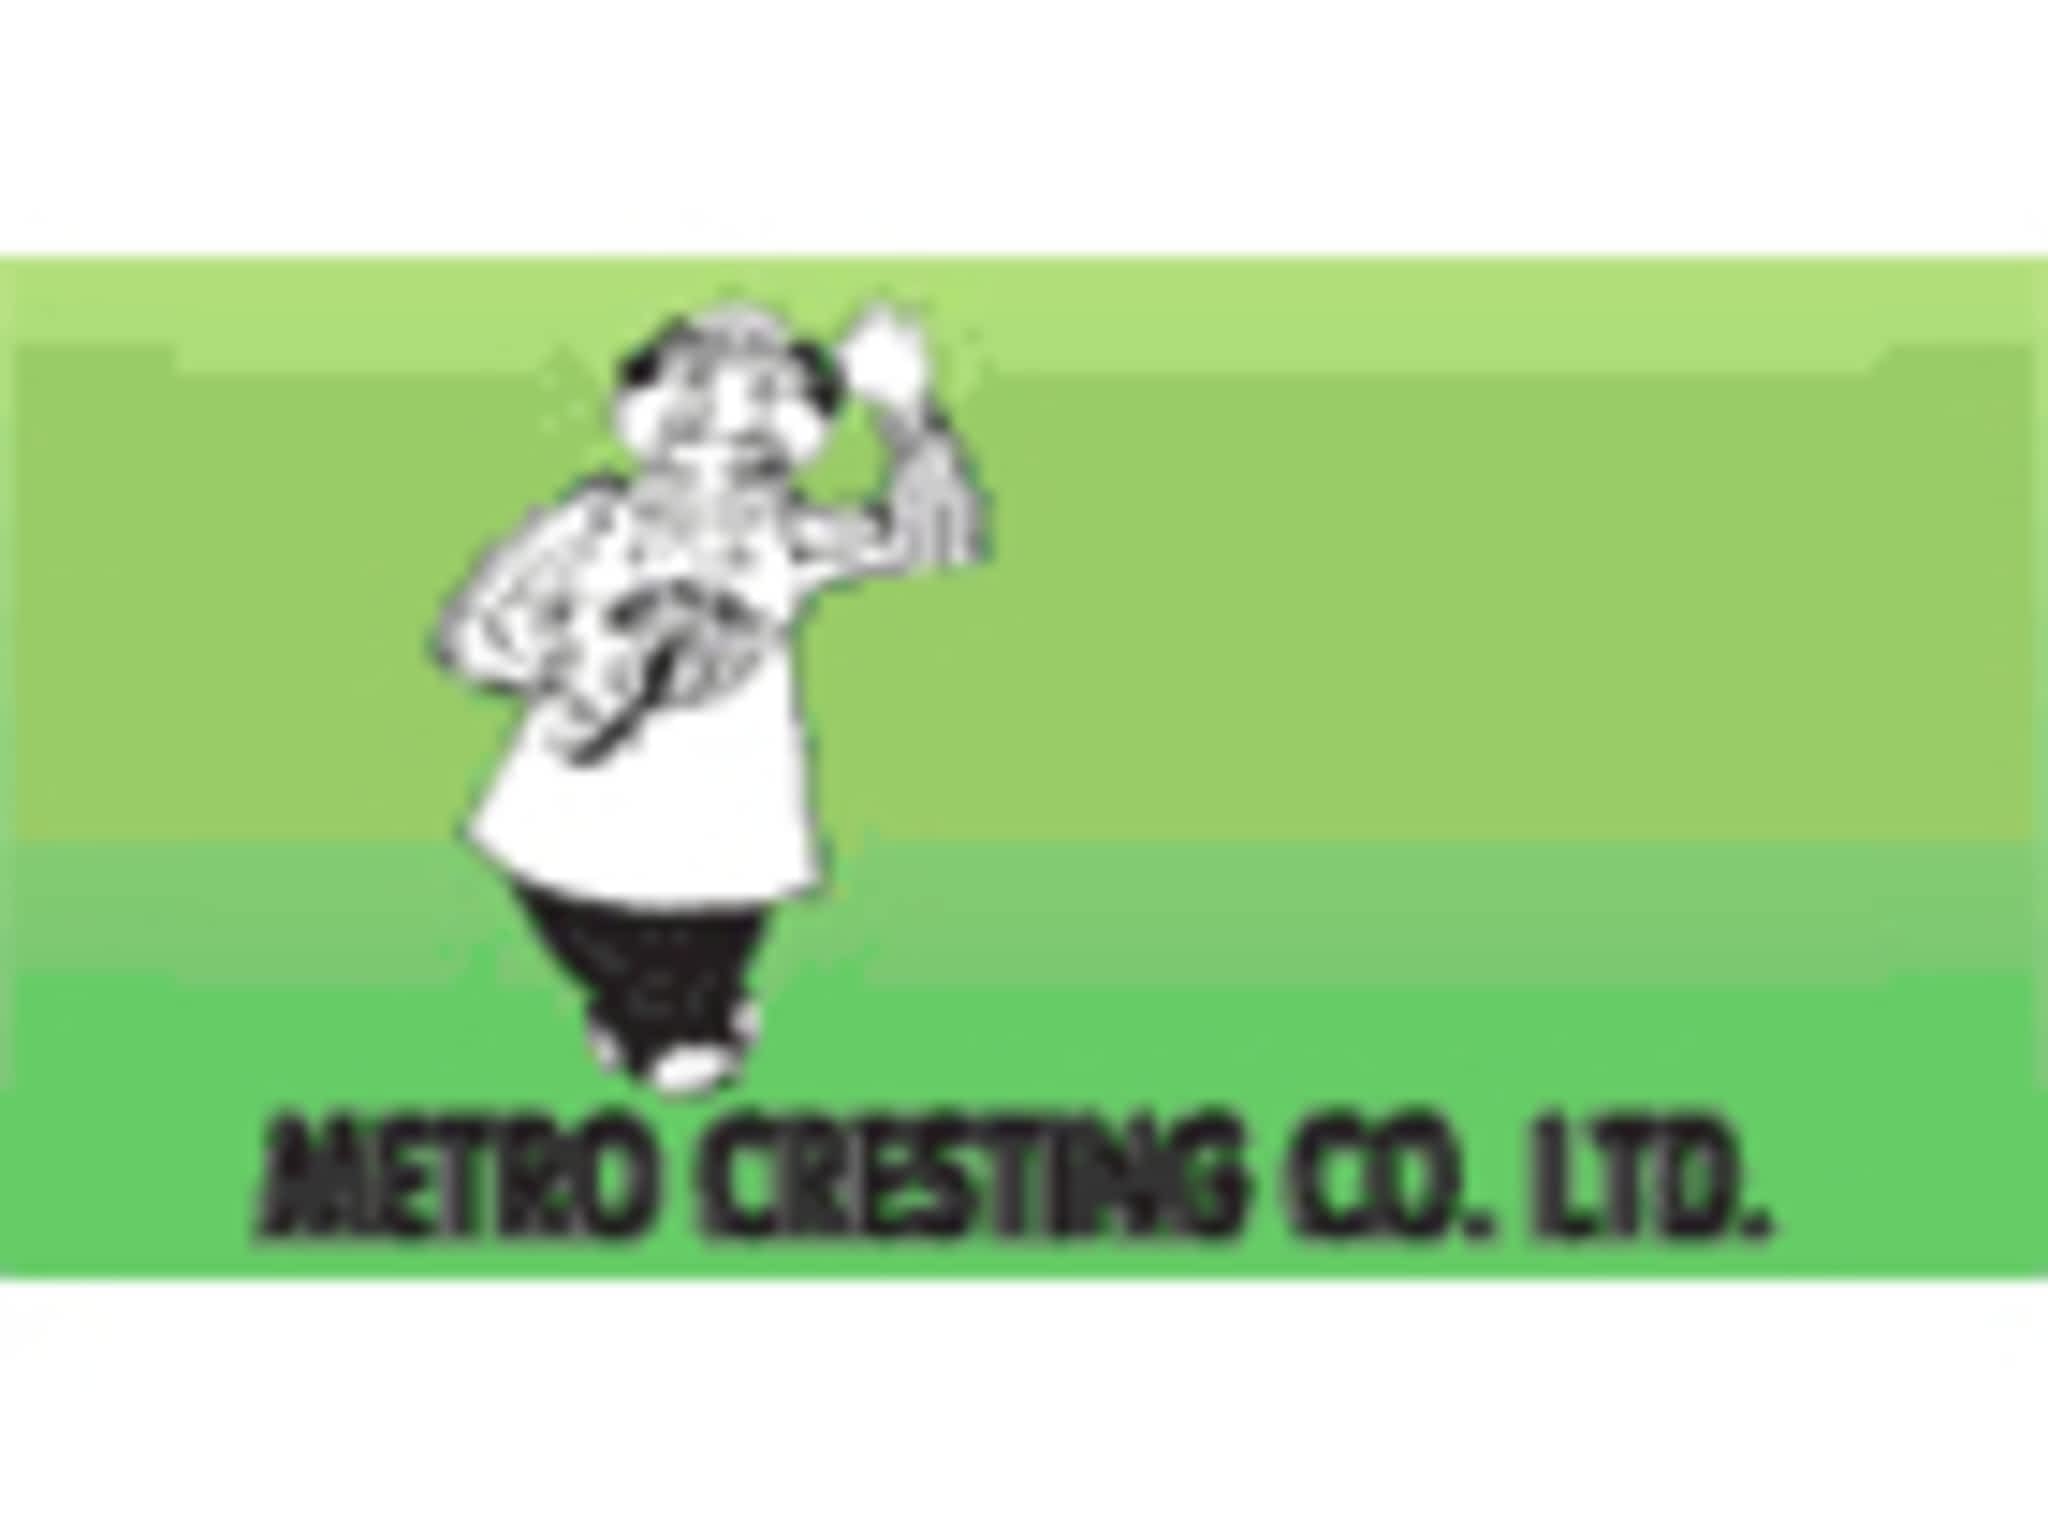 photo Metro Cresting Co Ltd